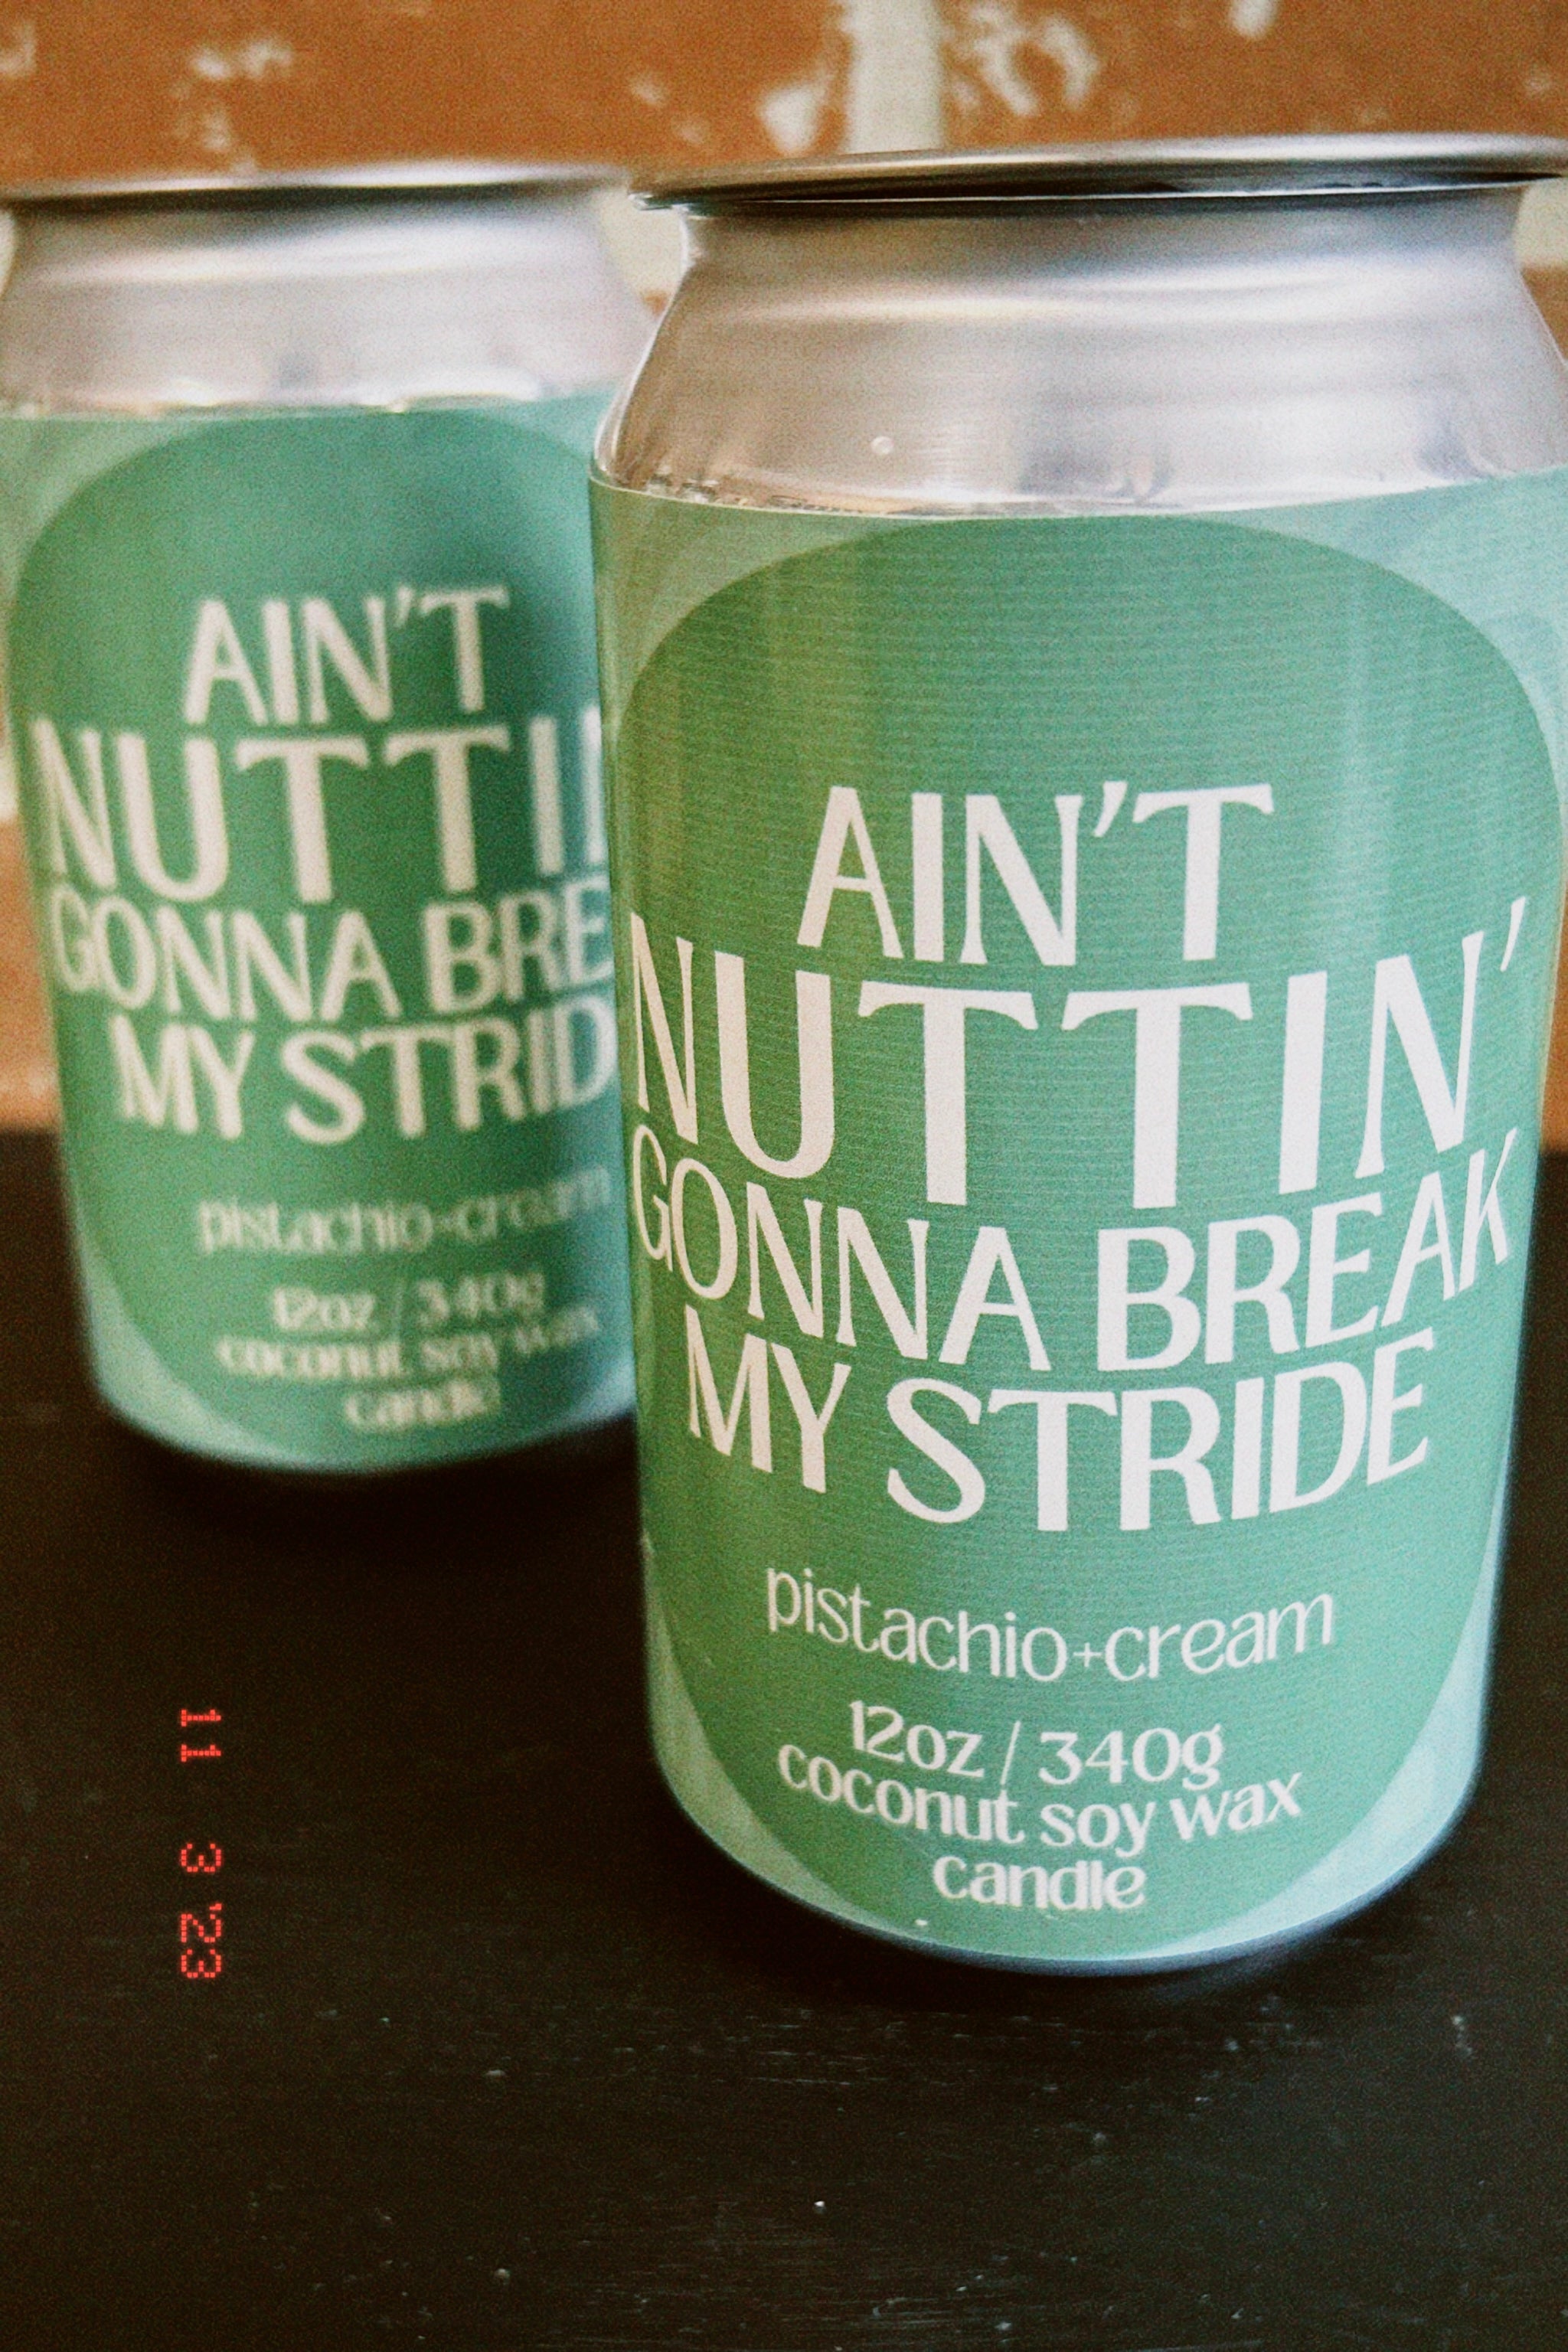 Ain’t NUTTIN’ Gonna Break My Stride